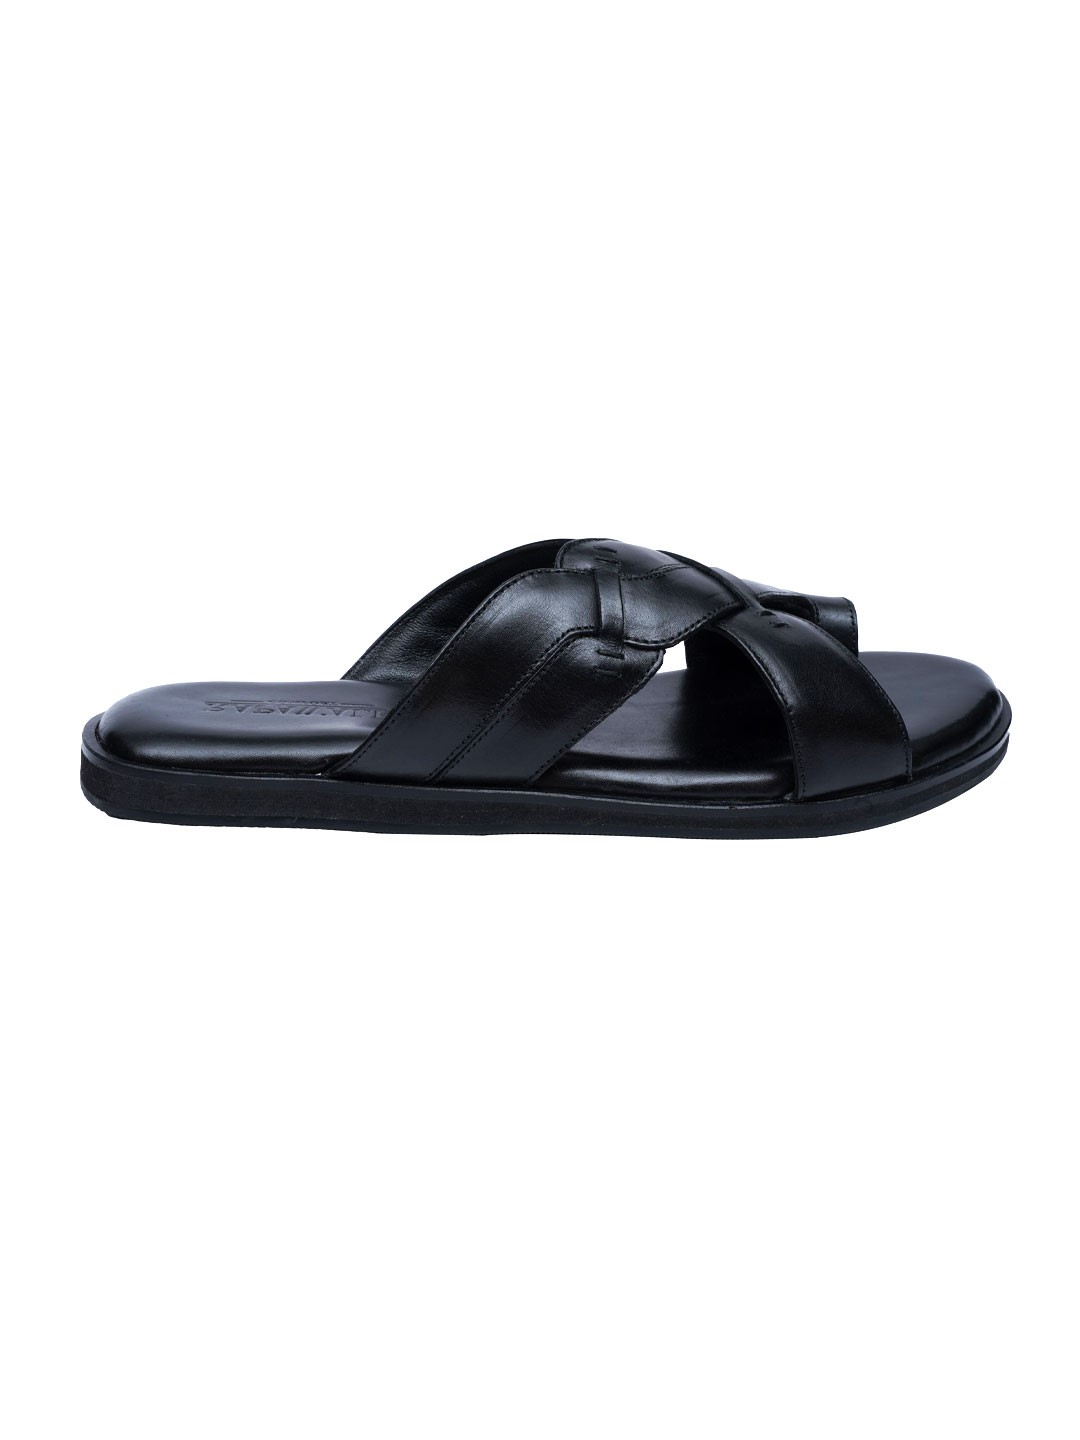 FAUSTO FST KI-9959 BLACK-40 Men's Black Buckle Criss Cross Strap Leather  Sandals (6 UK) : Amazon.in: Fashion